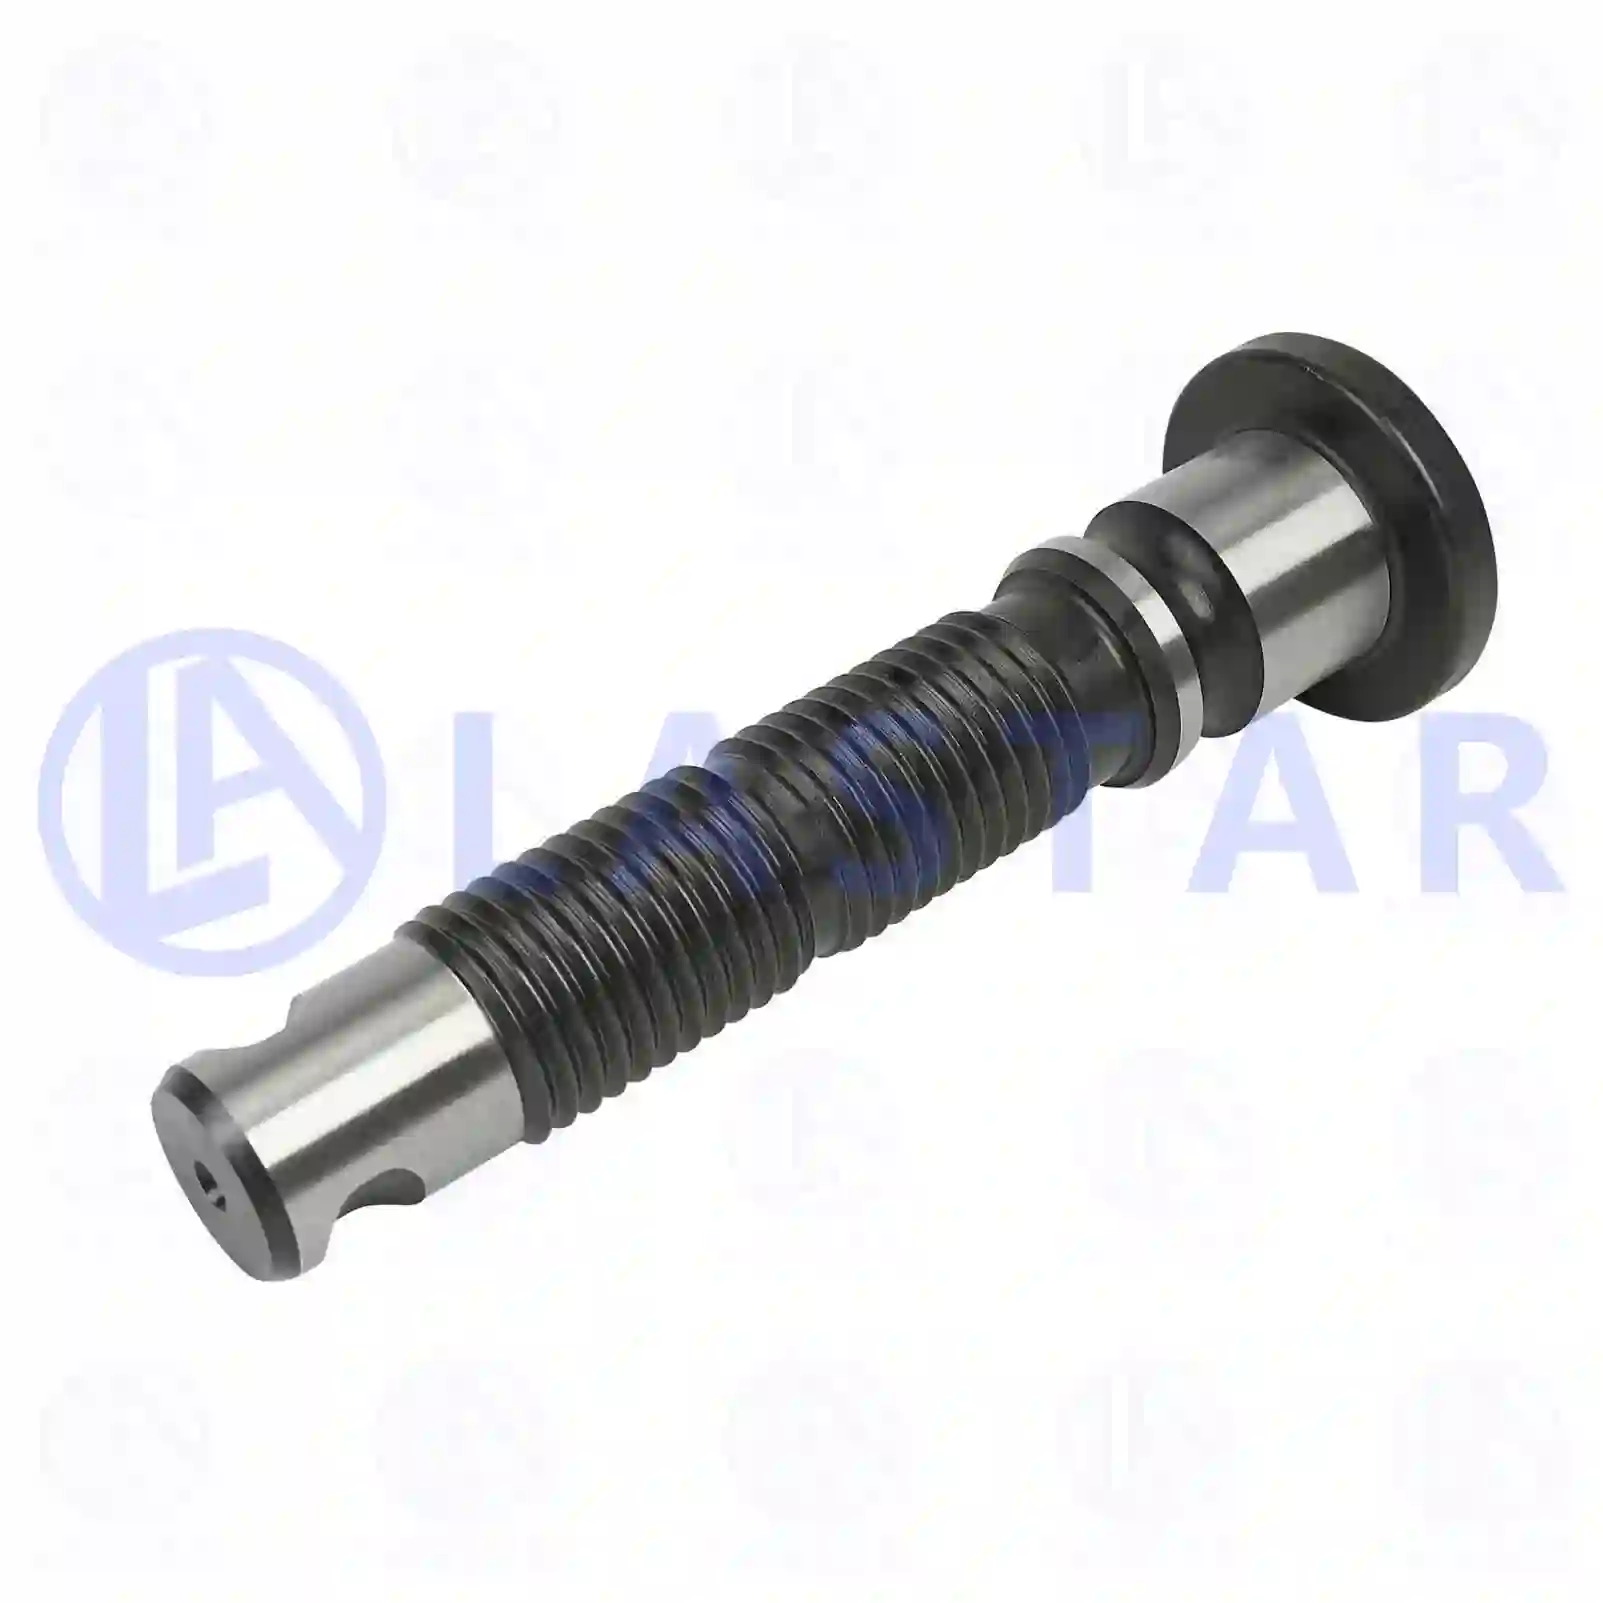  Spring bolt || Lastar Spare Part | Truck Spare Parts, Auotomotive Spare Parts